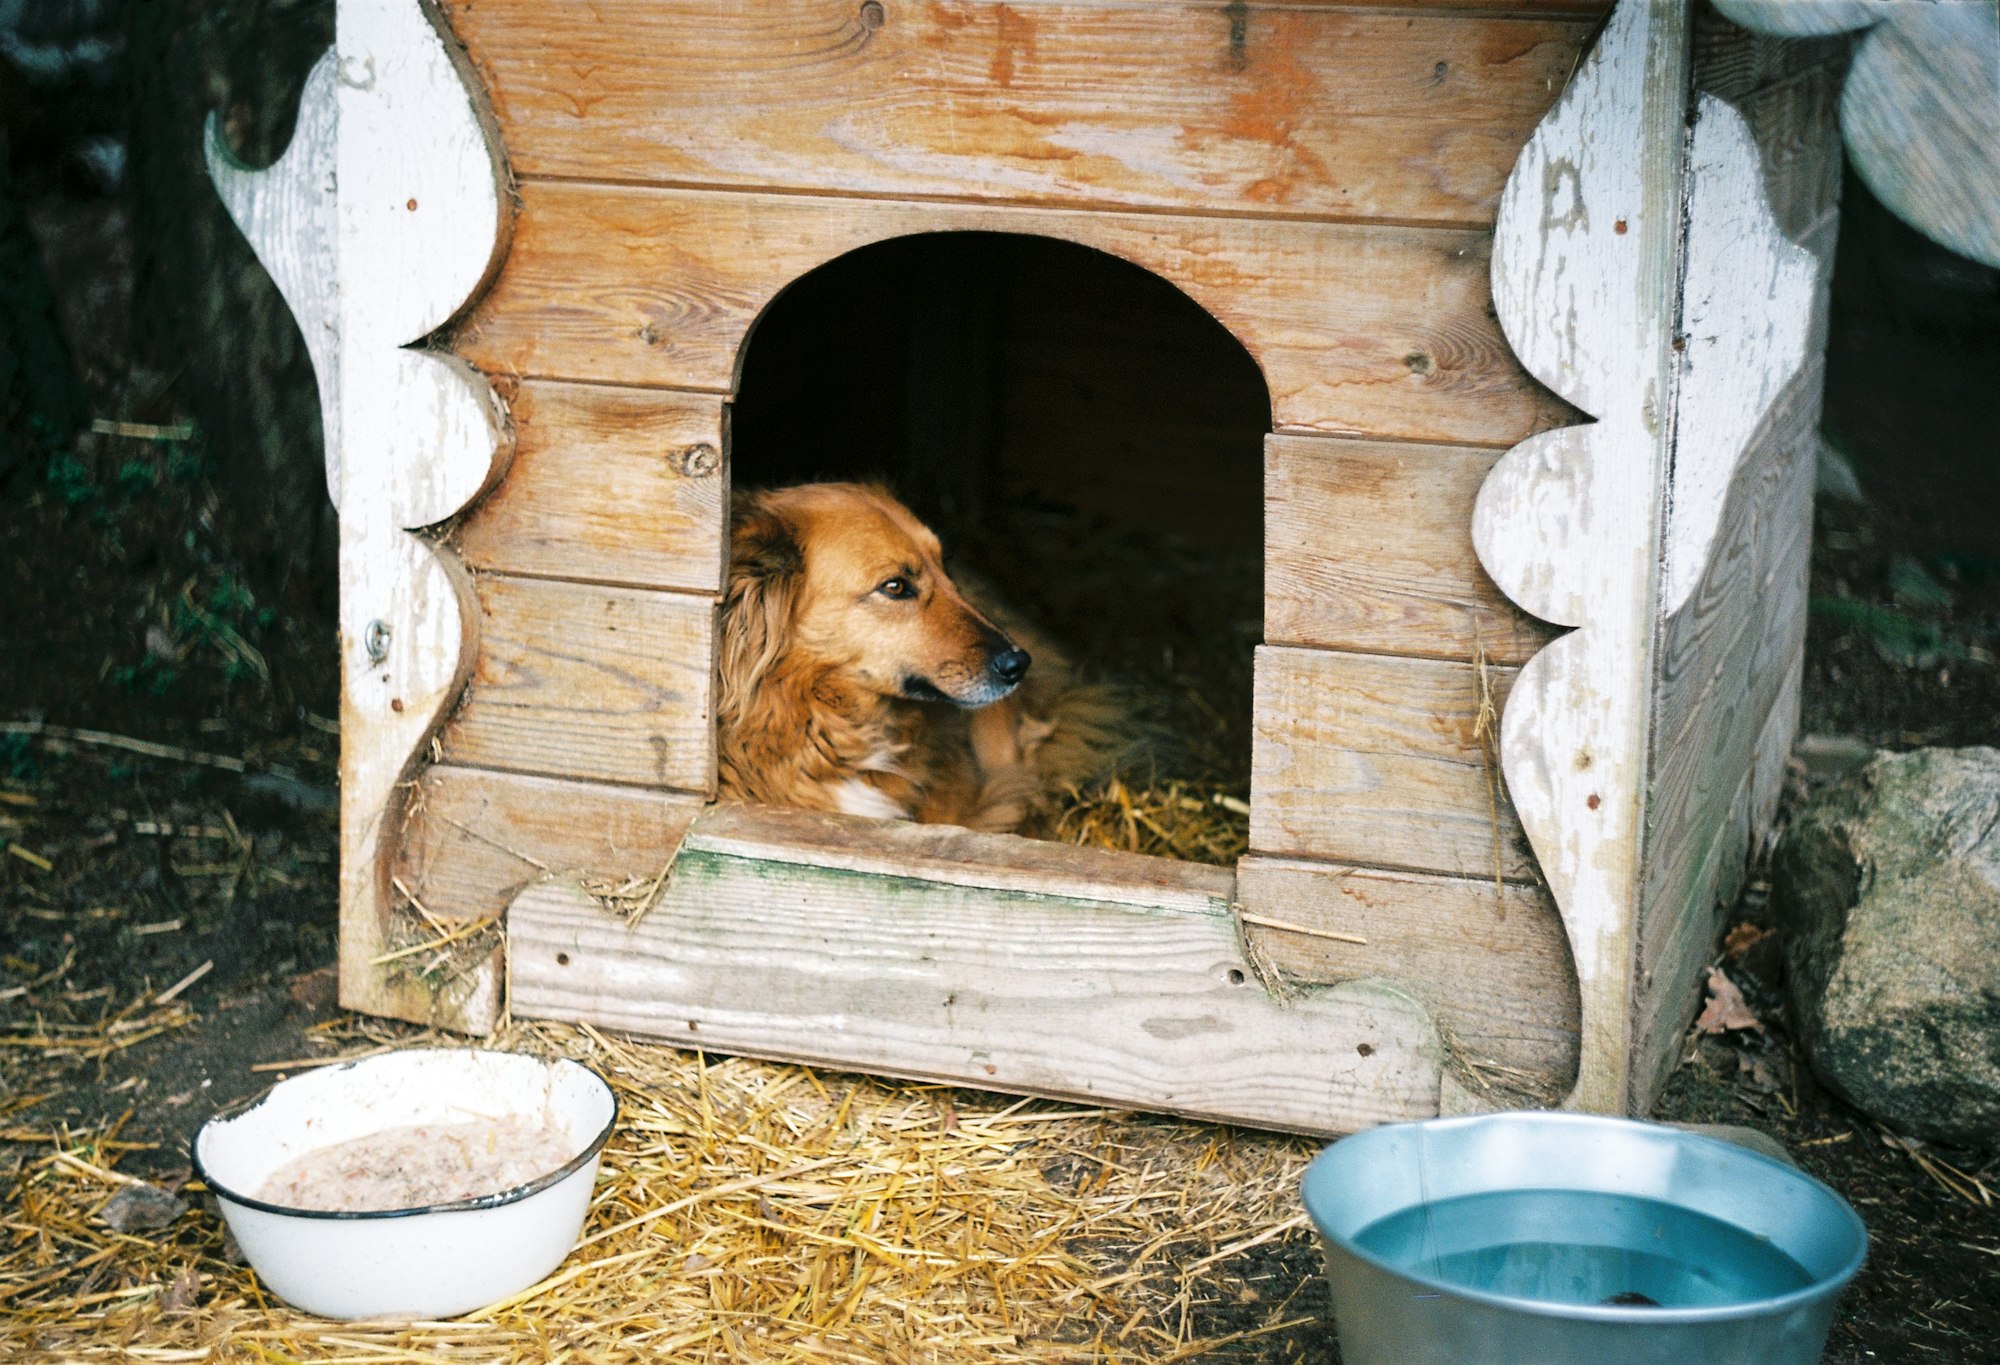 Heated Dog House